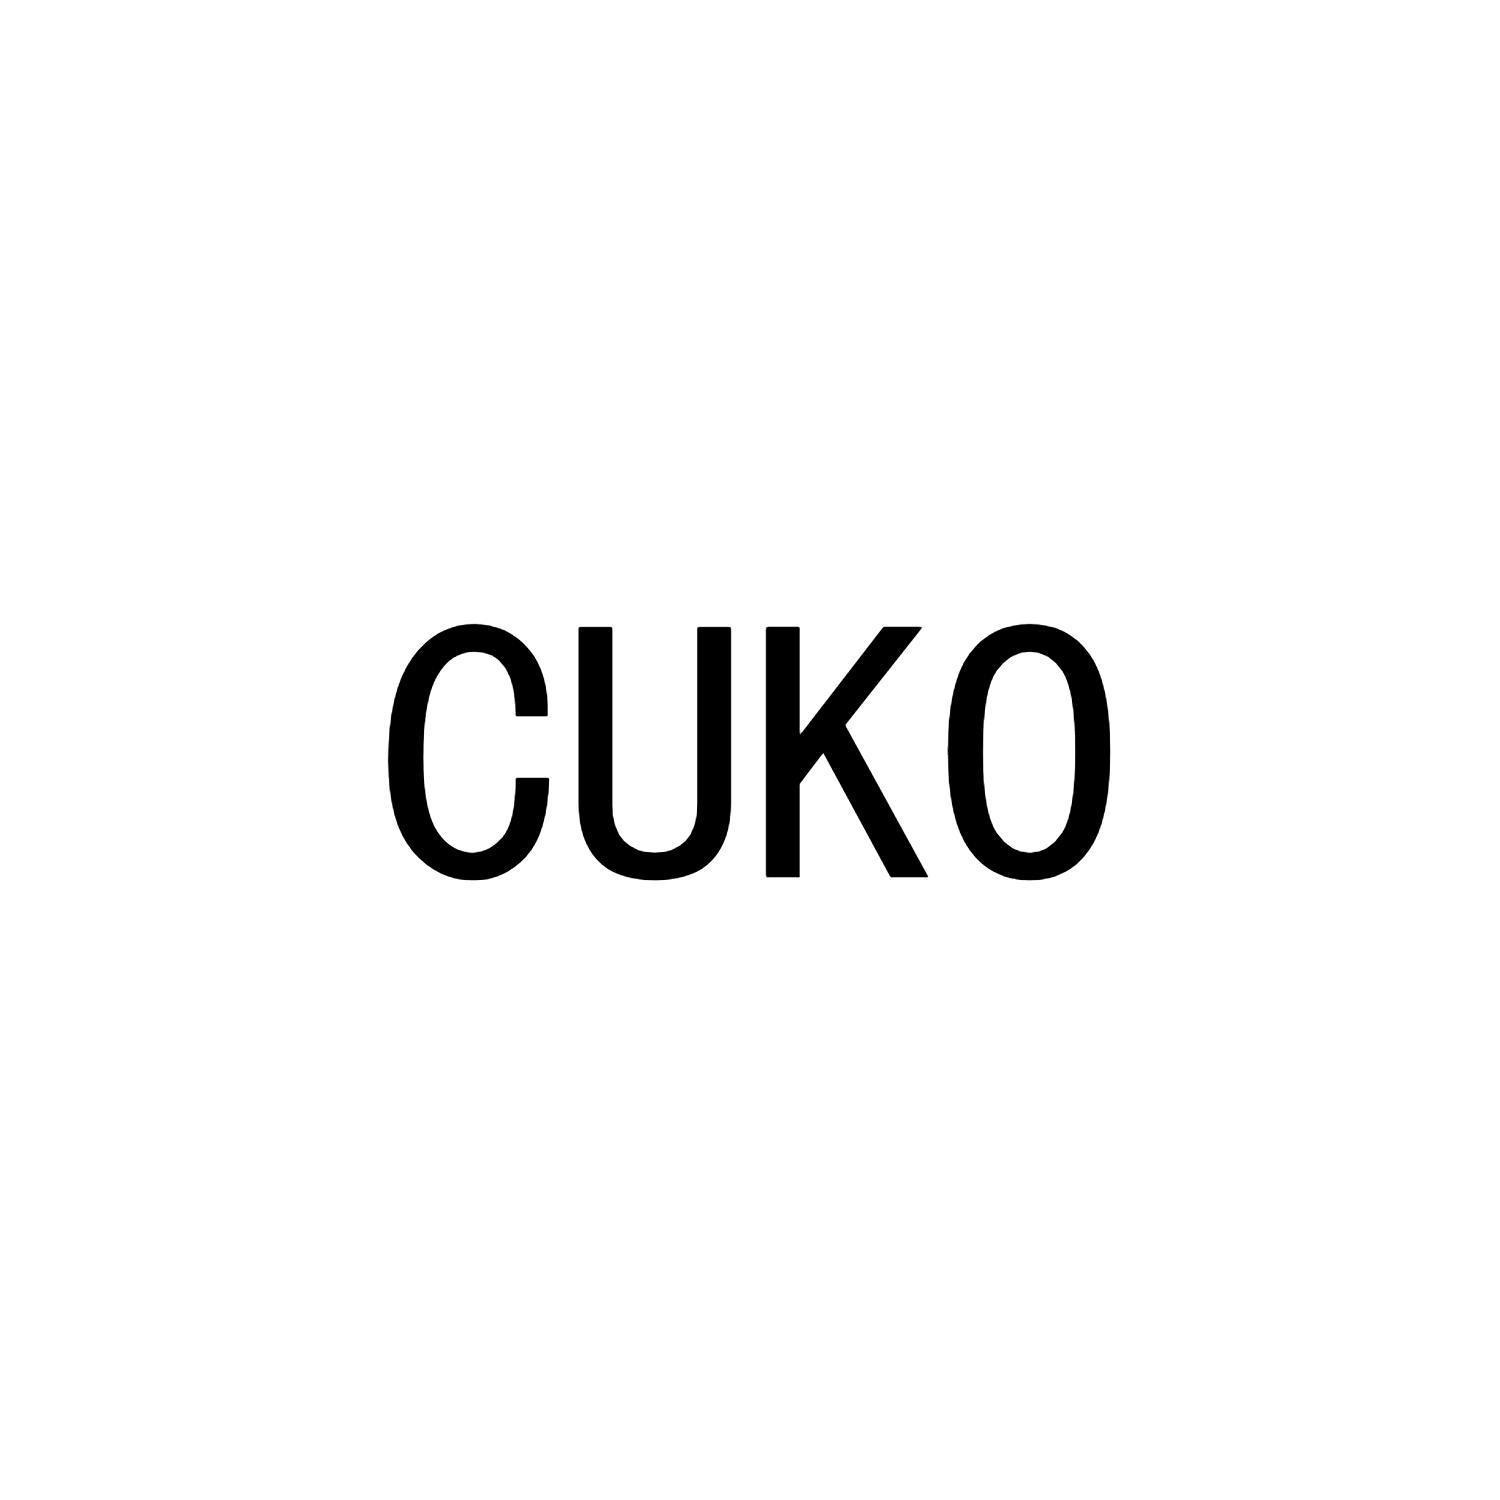 CUKO商标转让